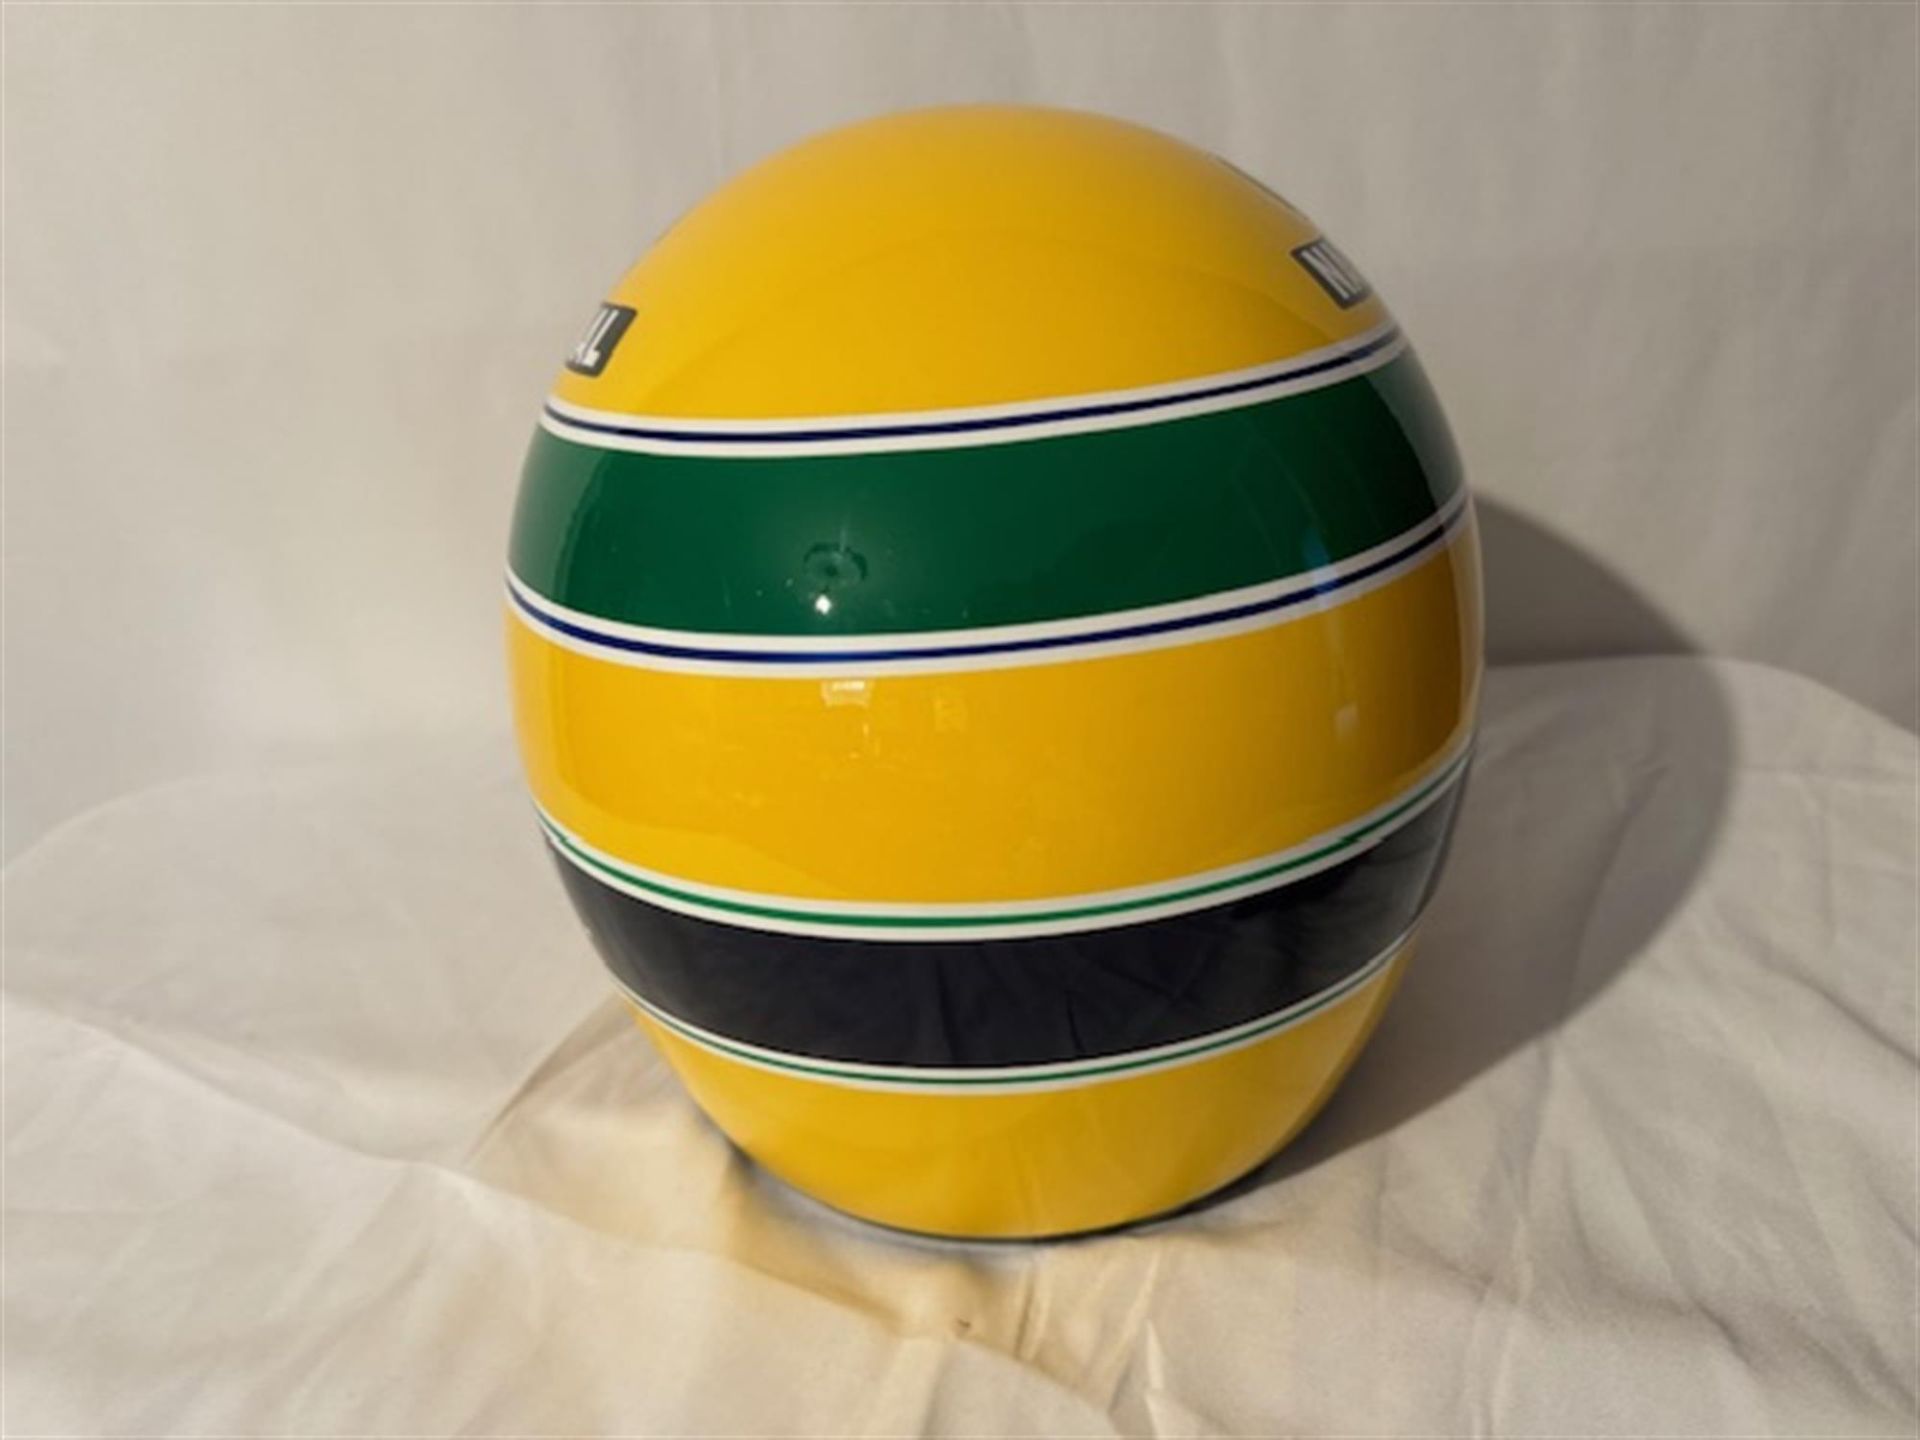 Replica Ayrton Senna Helmet Produced in 1993 by Shoei - Image 4 of 10